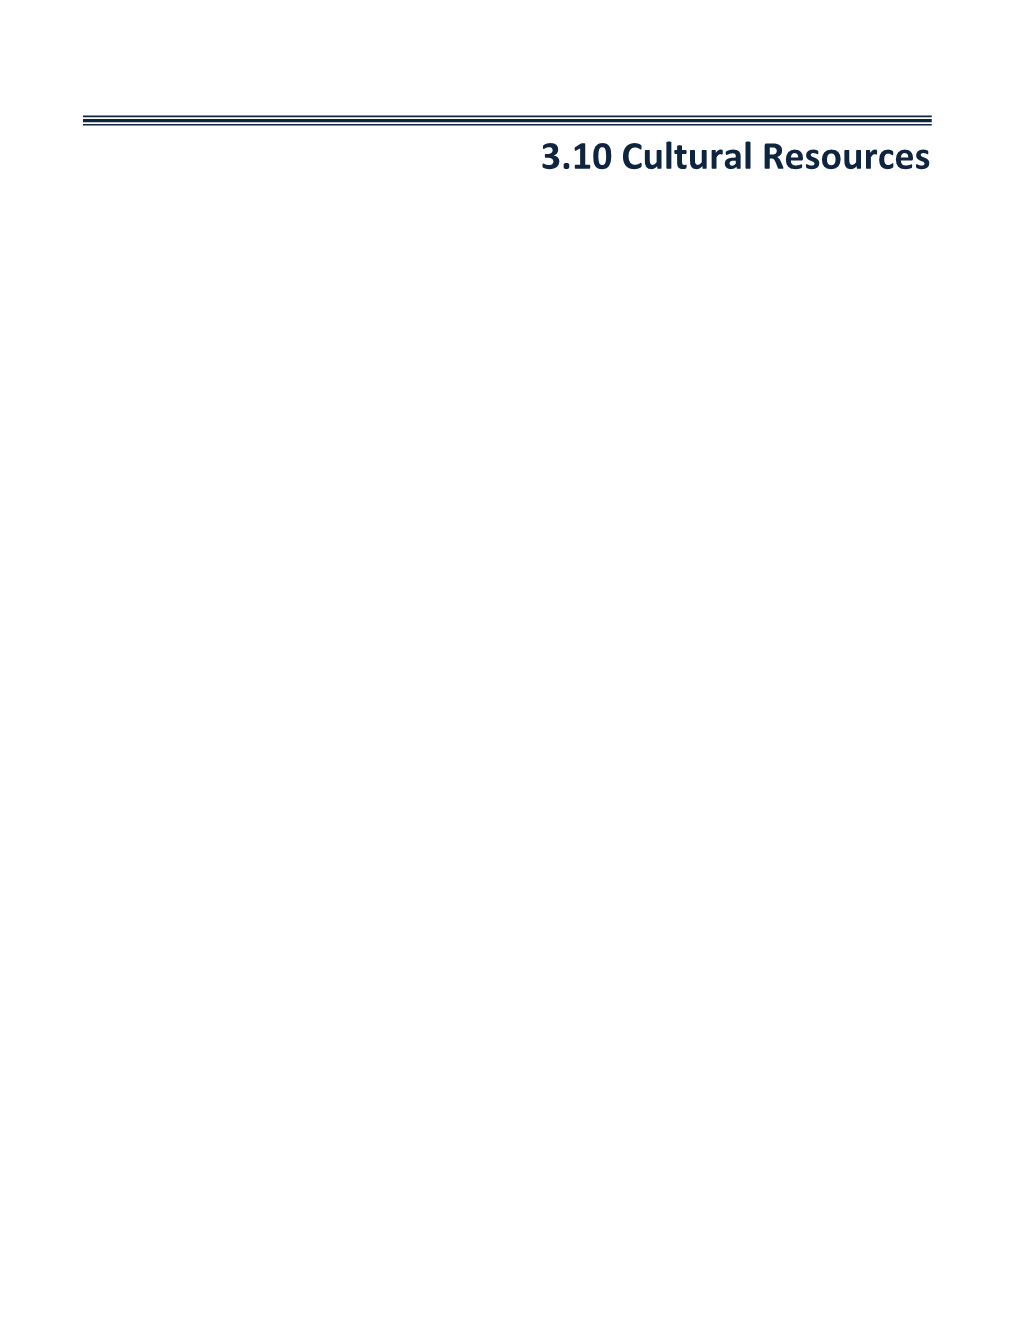 HSTT Final EIS/OEIS Section 3.10 Cultural Resources